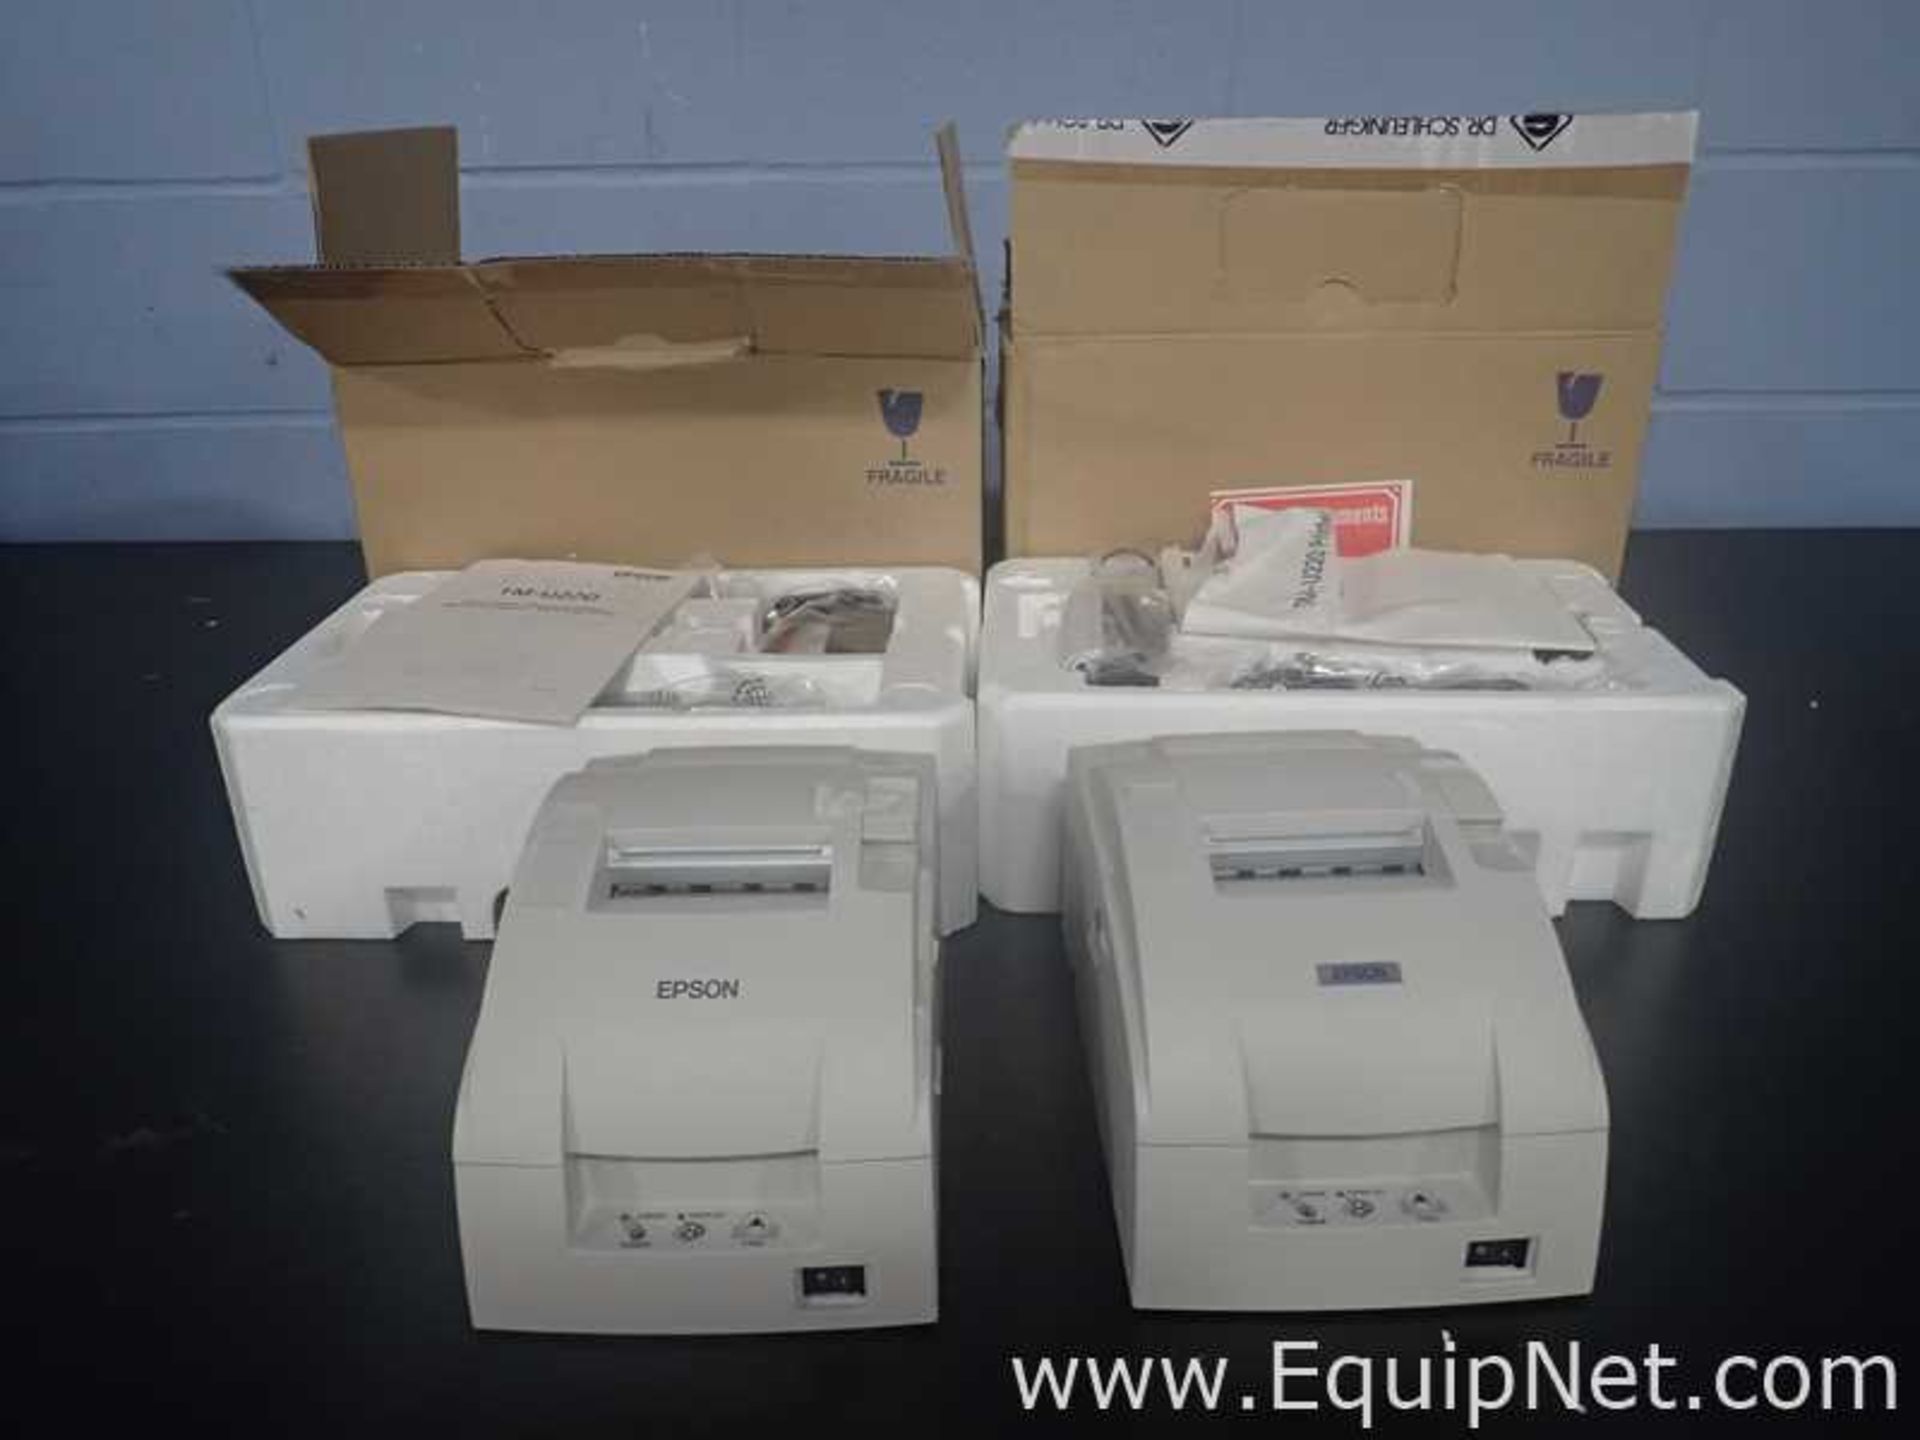 Lot of 2 Epson M188D Receipt Printer